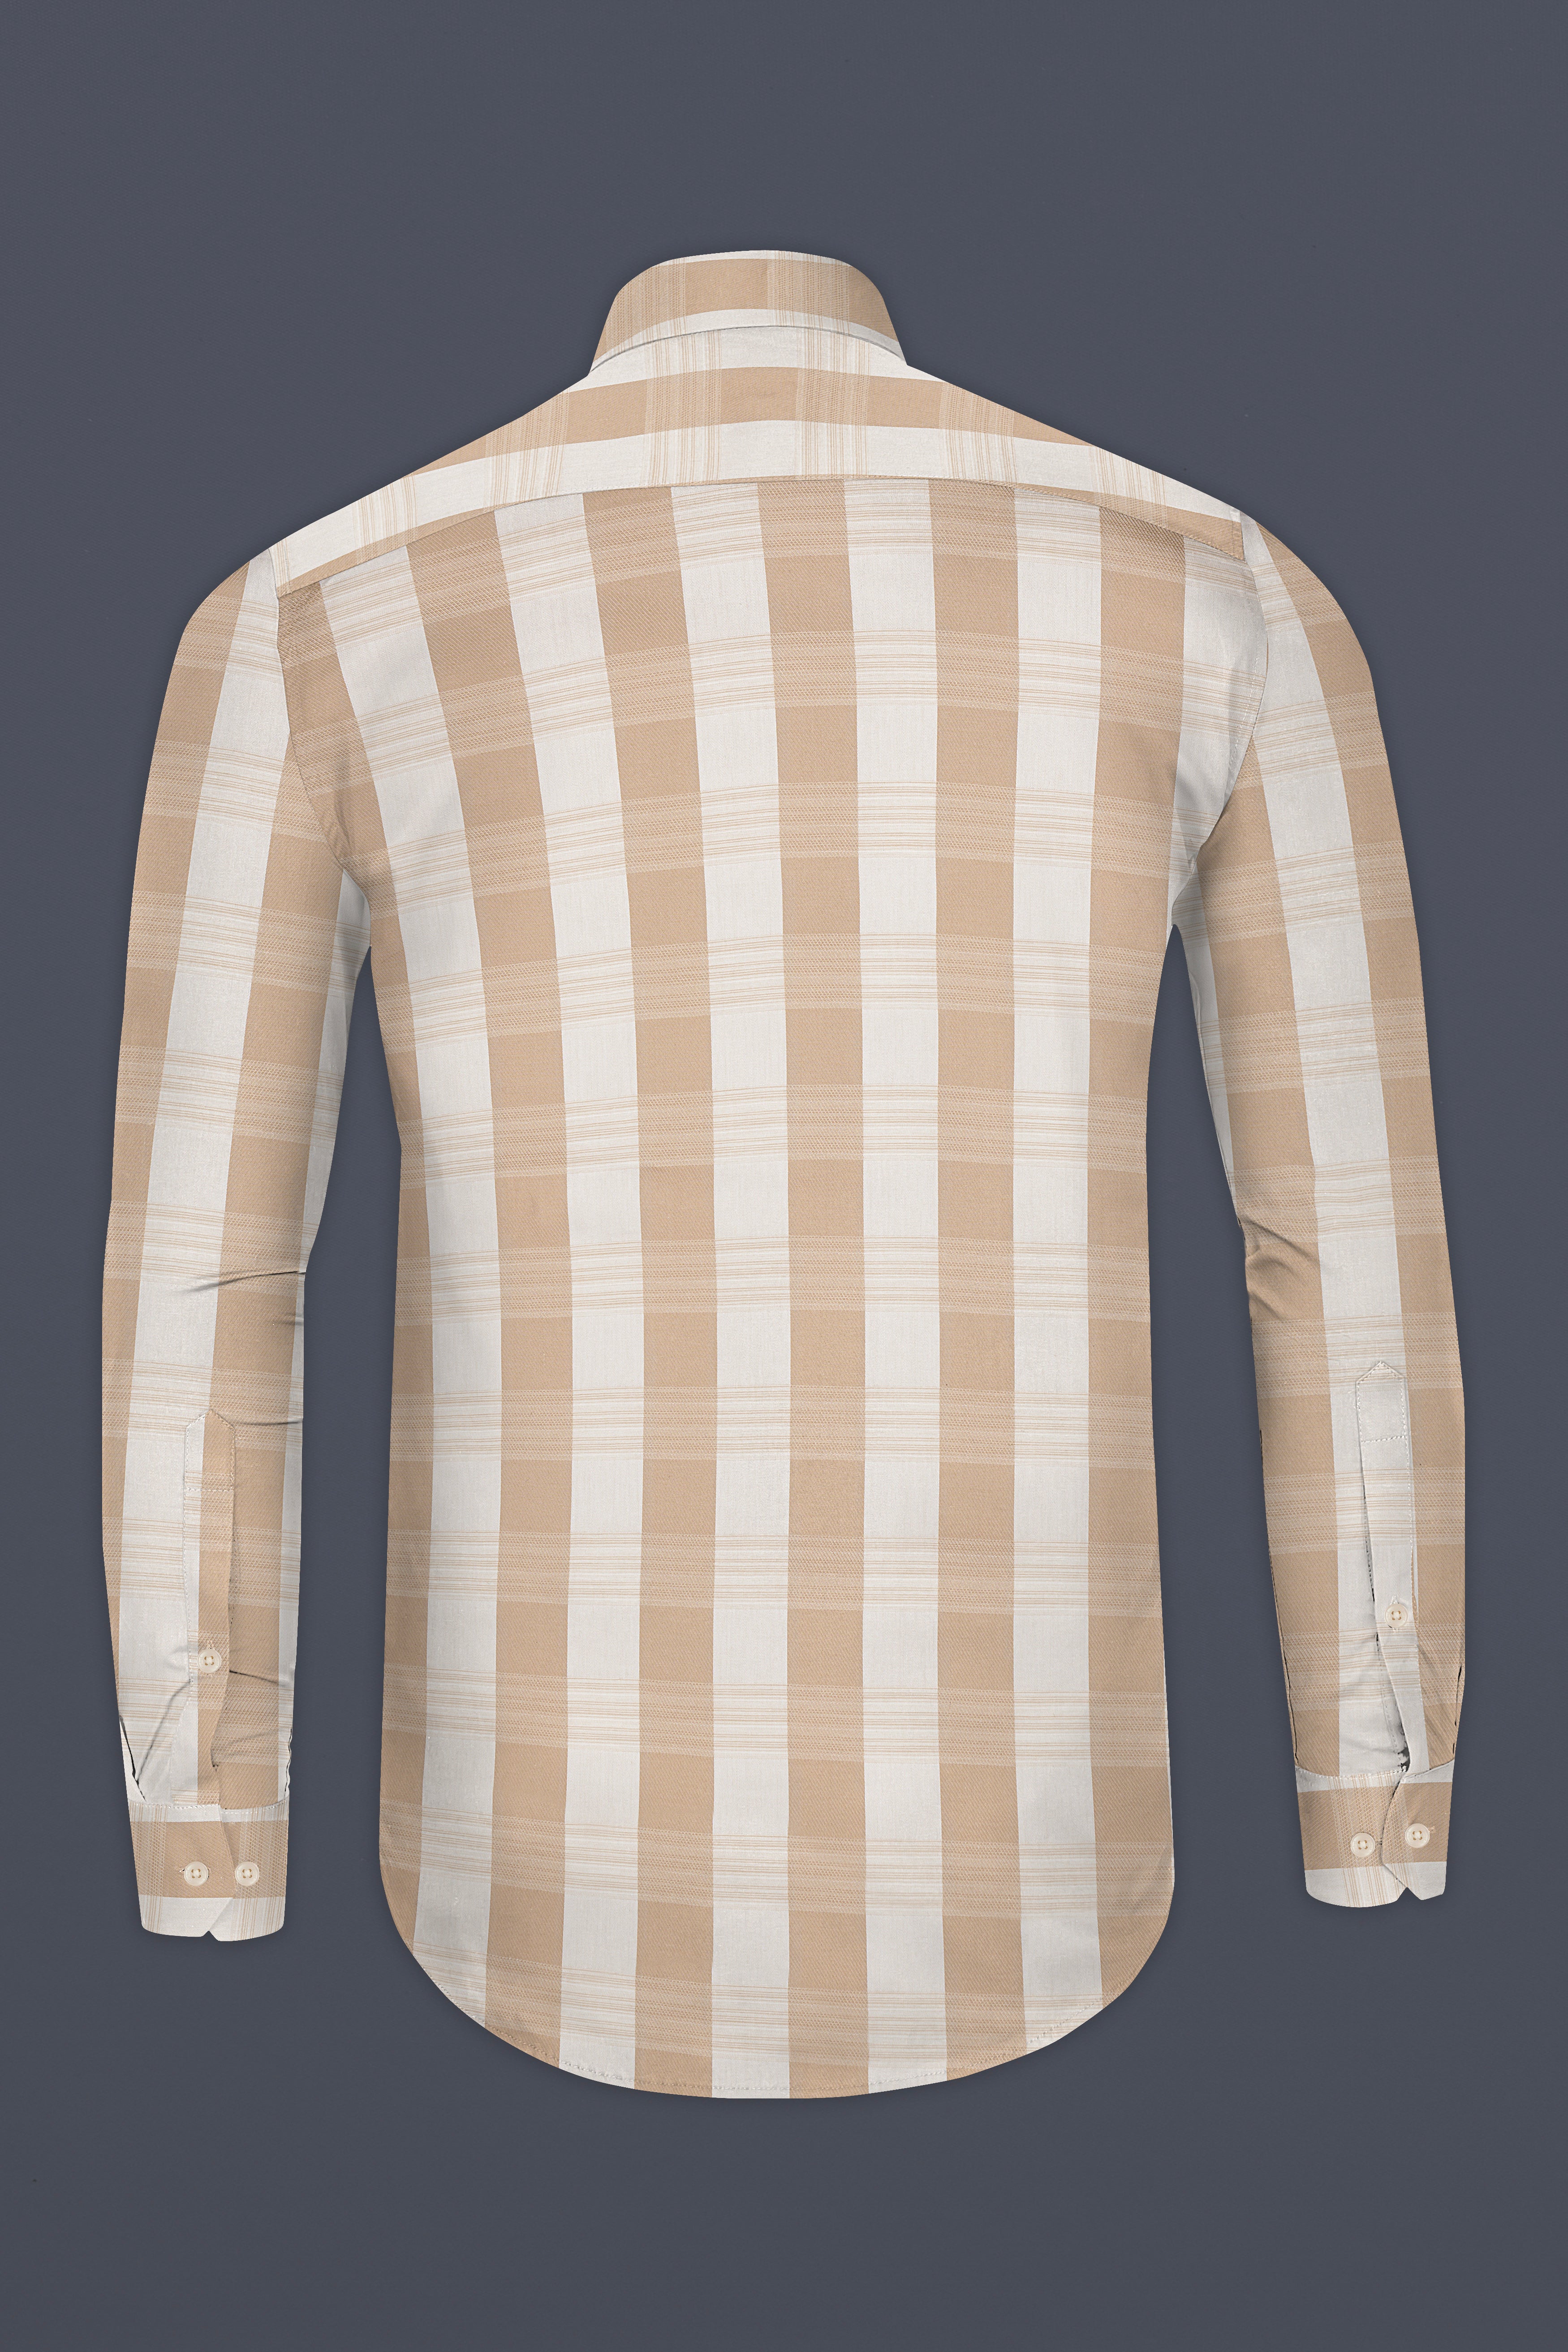 Cameo Brown with Vista White Plaid Jacquard Textured Premium Cotton Shirt